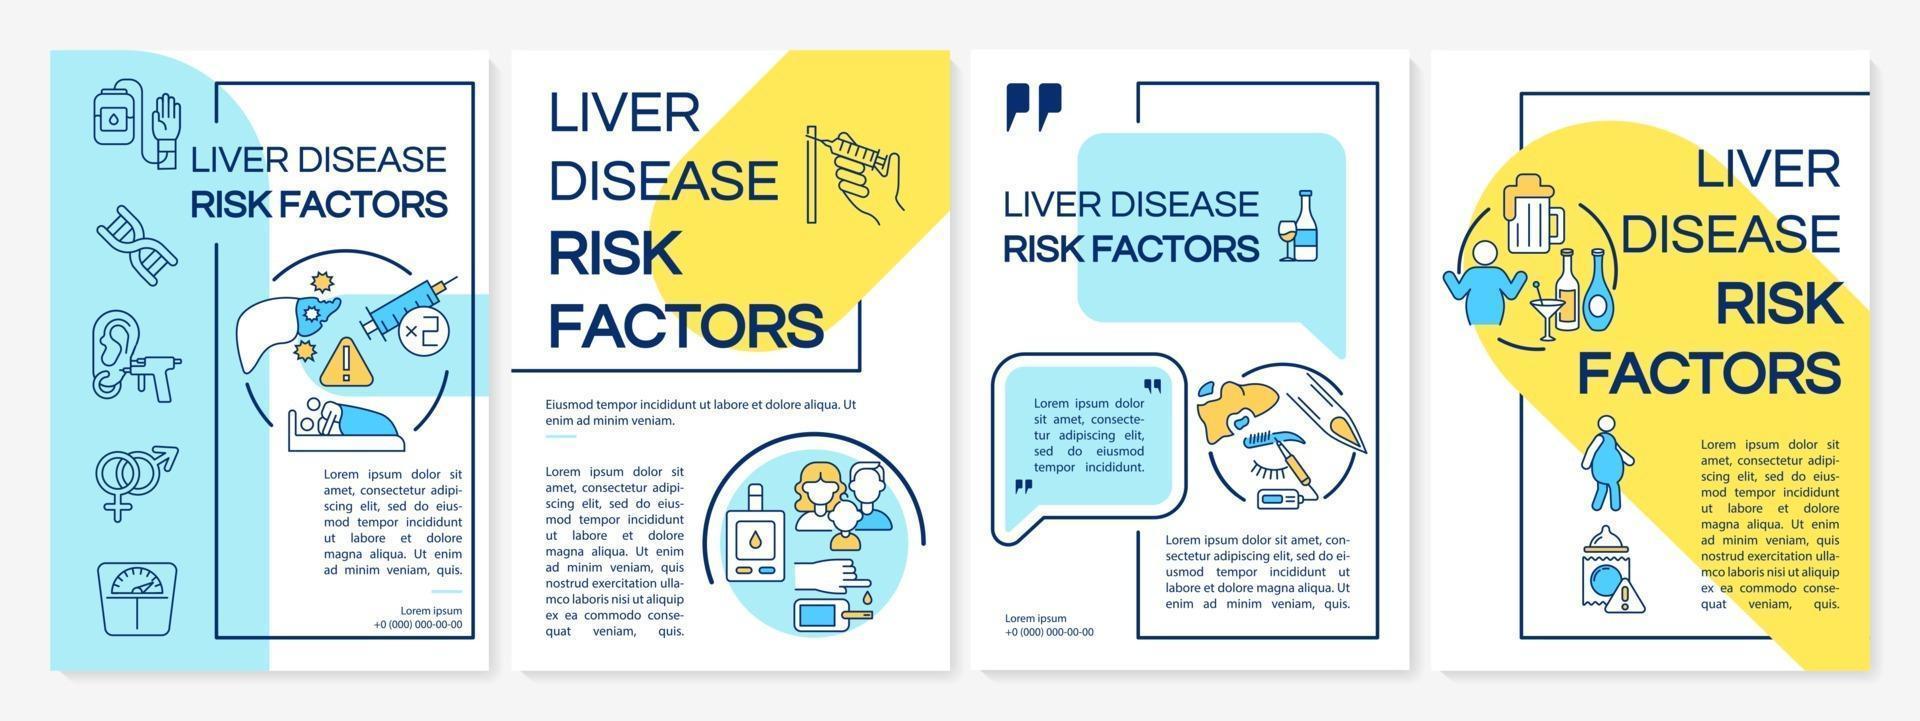 Liver disease risk factors brochure template vector